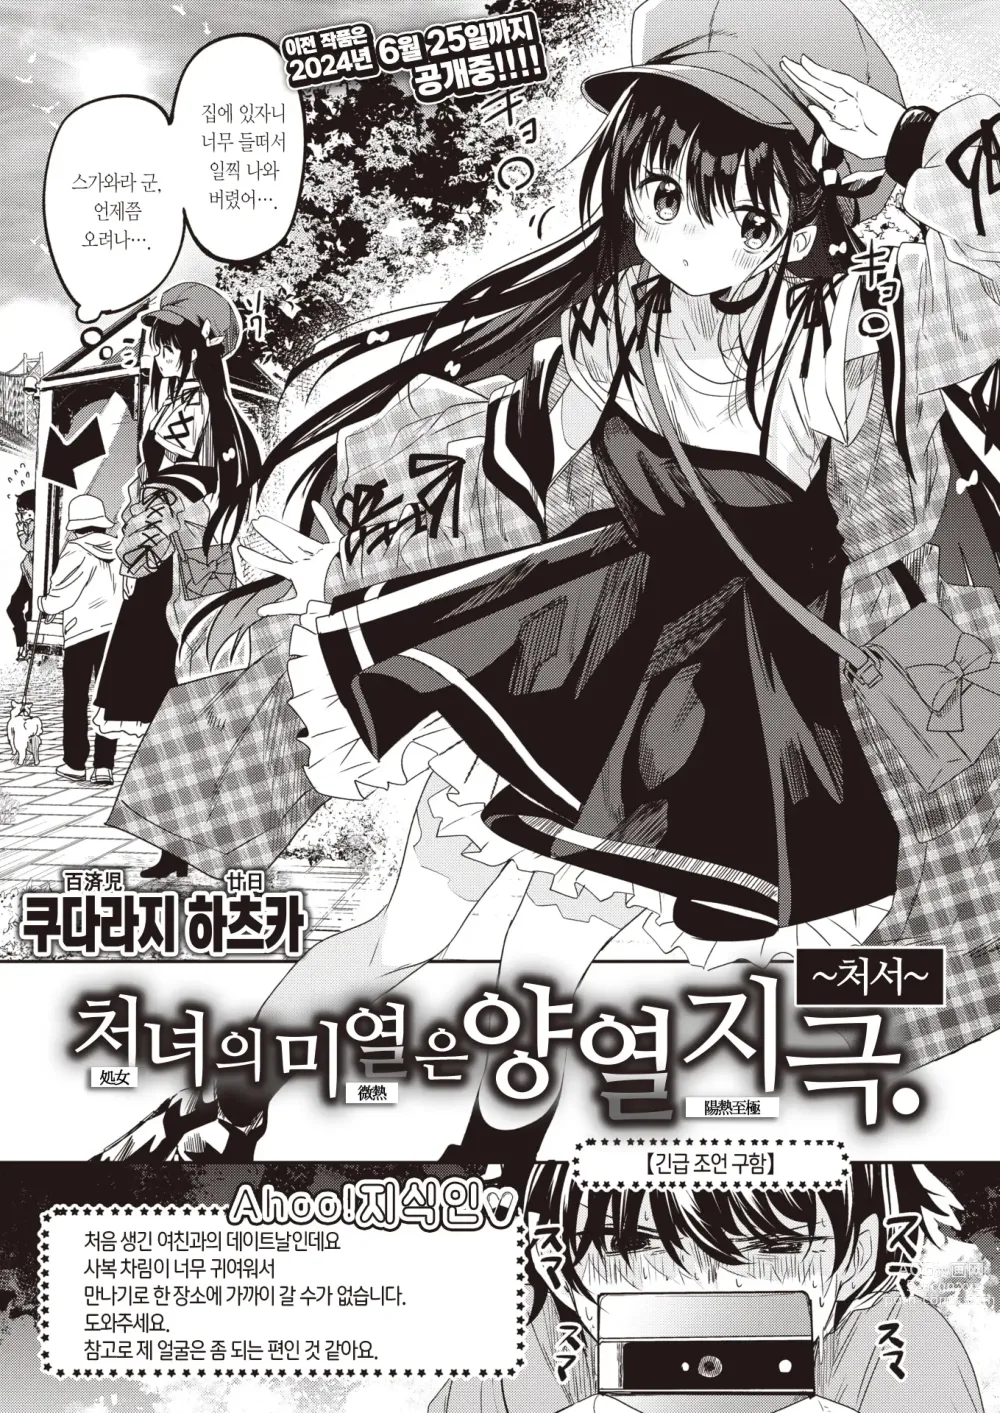 Page 2 of manga 처녀의 미열은 양열지극. ~처서~